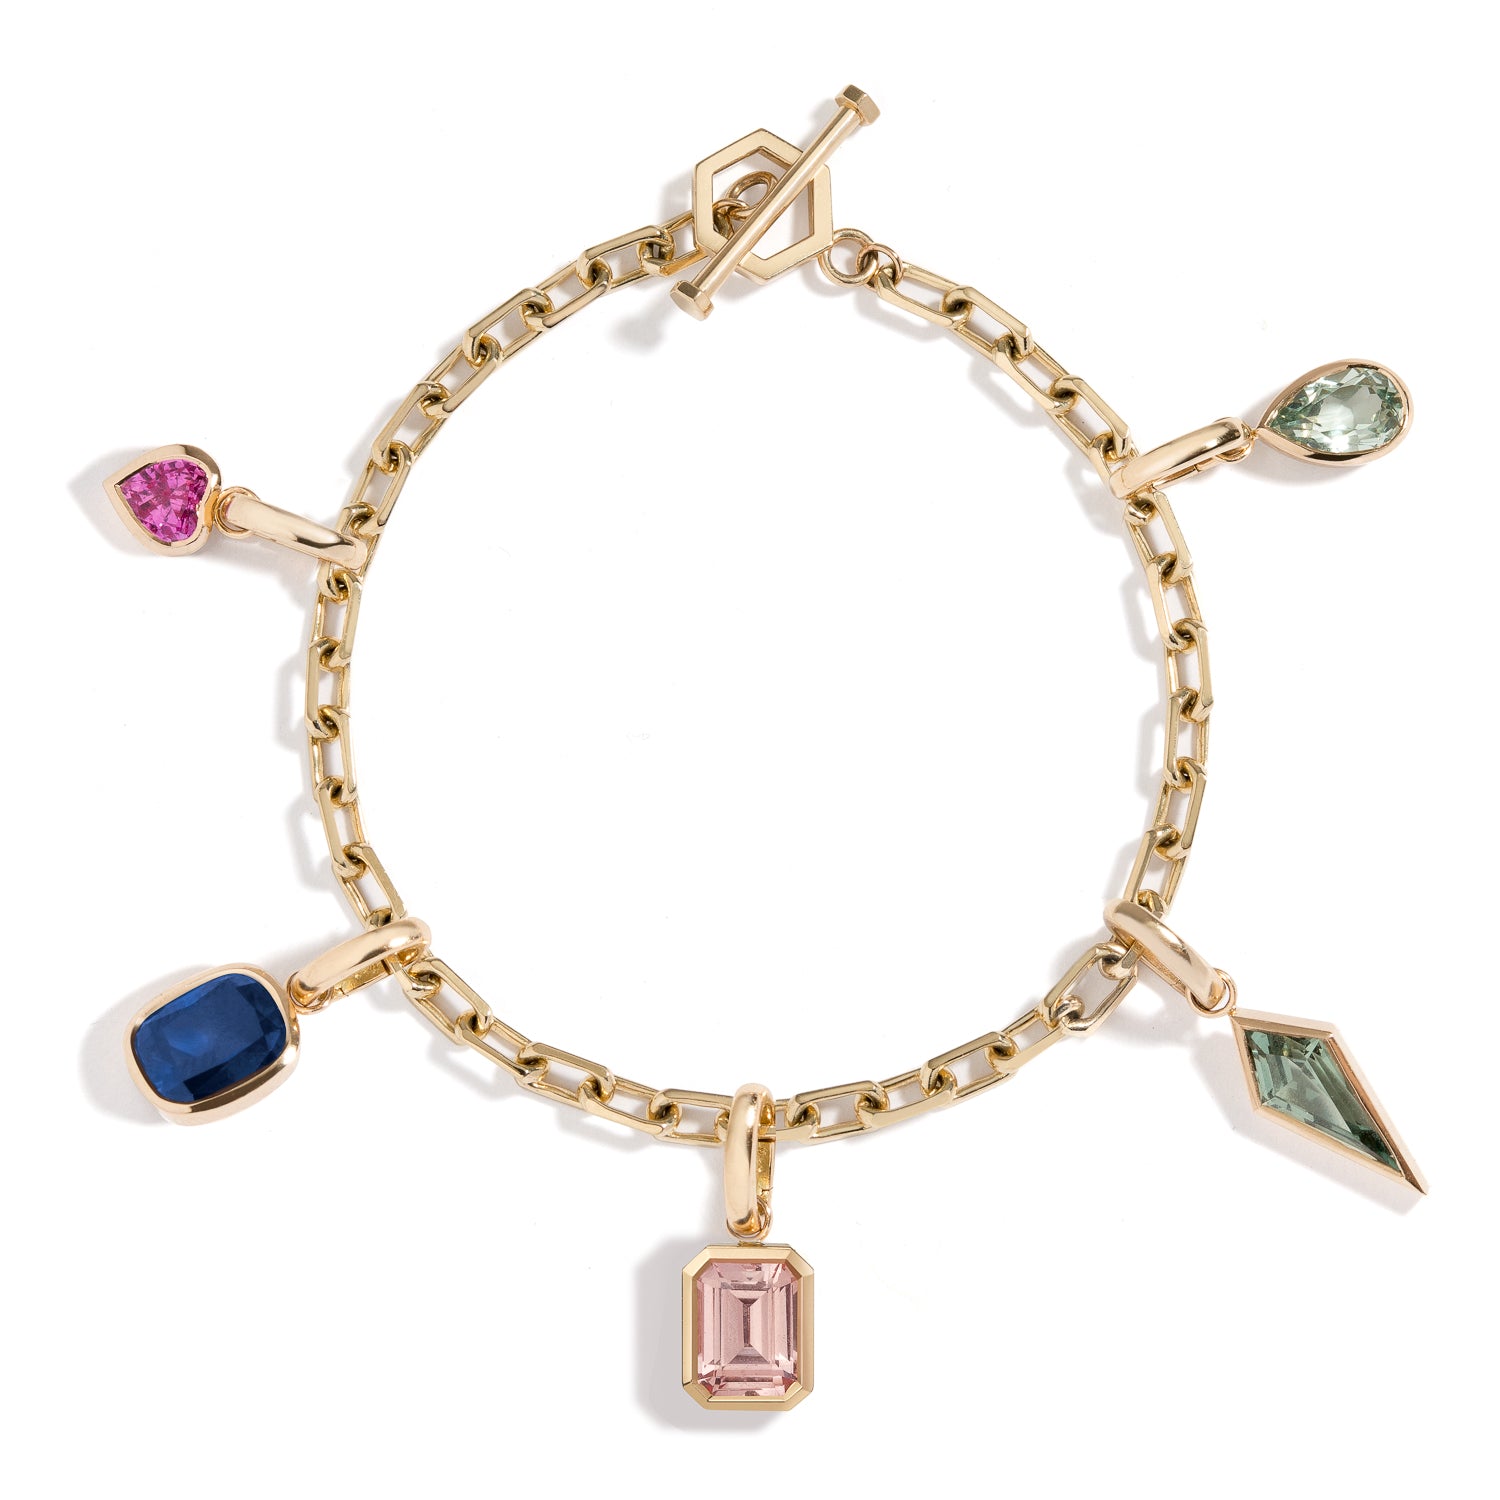 Rose Gold Vermeil Charm Bracelet, Toggle Clasp | Wellesley Row